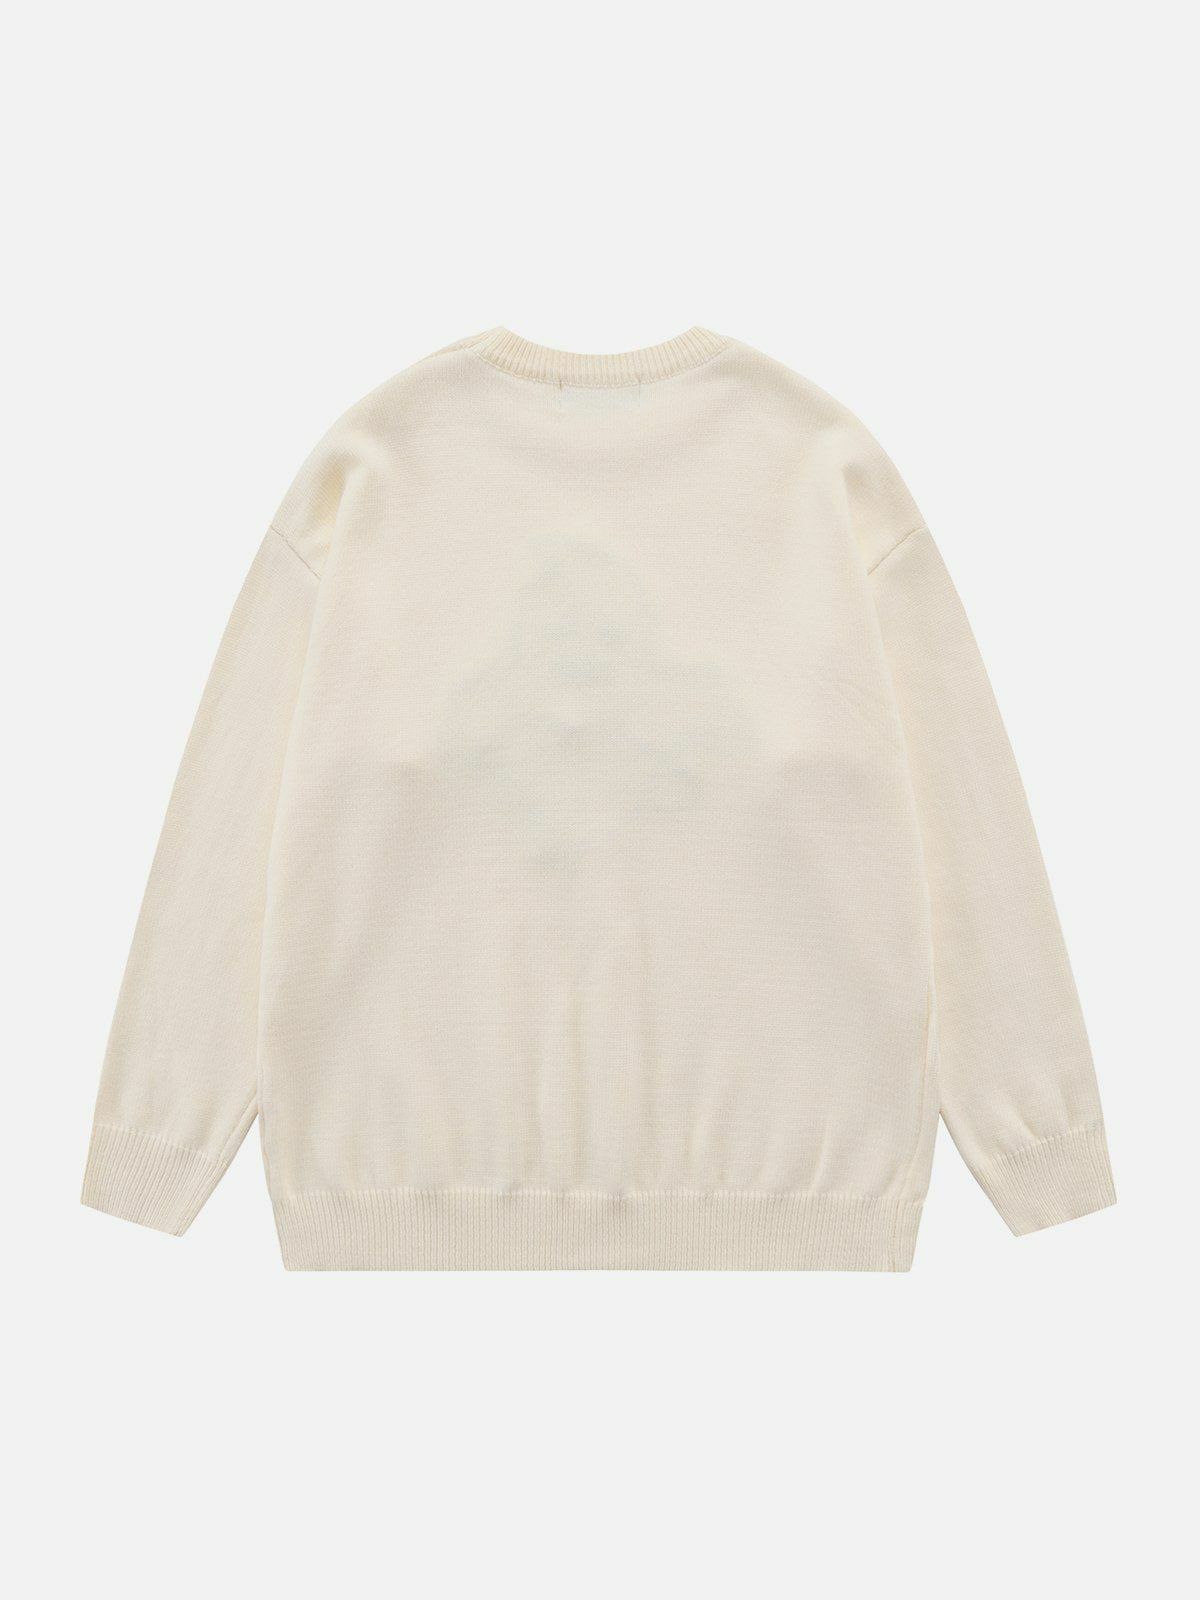 flocked ghost sweater edgy y2k streetwear charm 3273